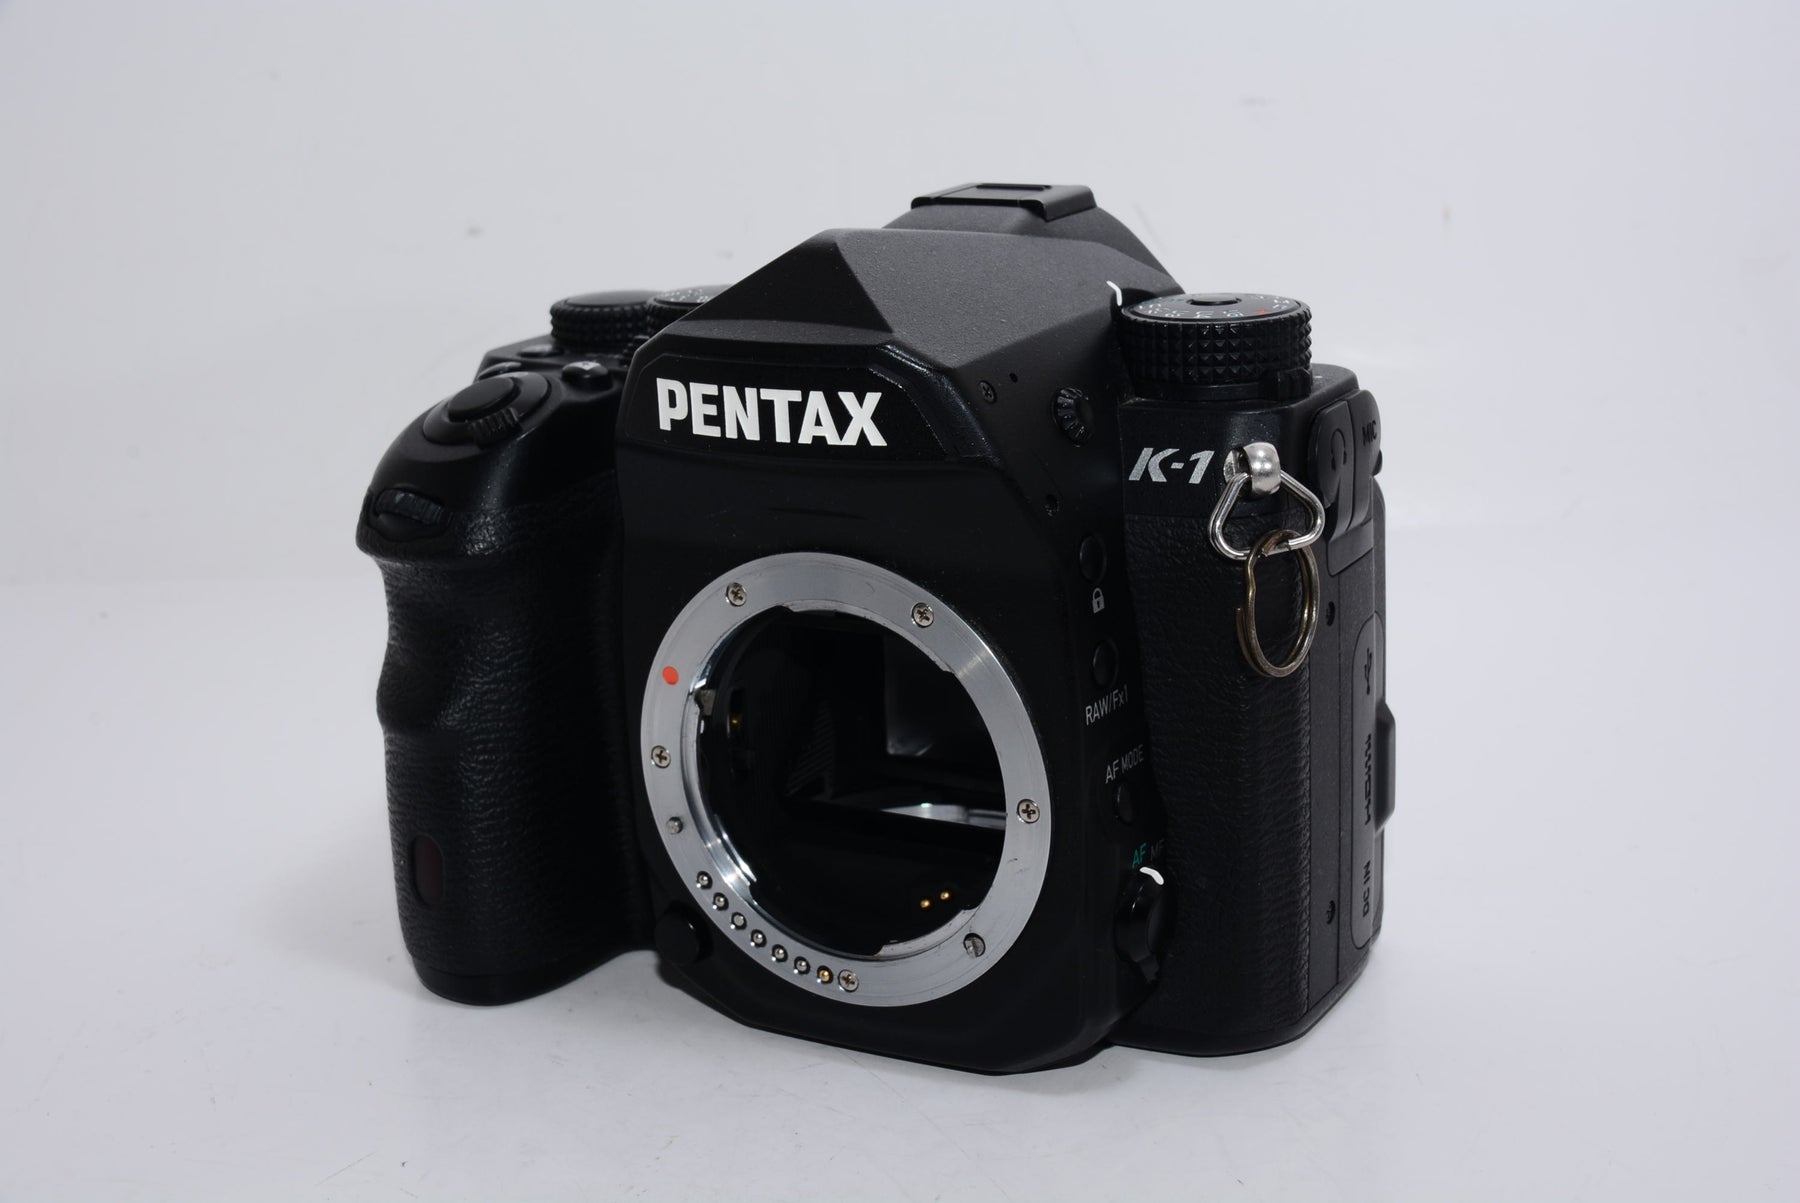 PENTAX ペンタックス デジタル一眼レフカメラ K-7 ボディK-7 #9774 大切な人へのギフト探し - デジタルカメラ